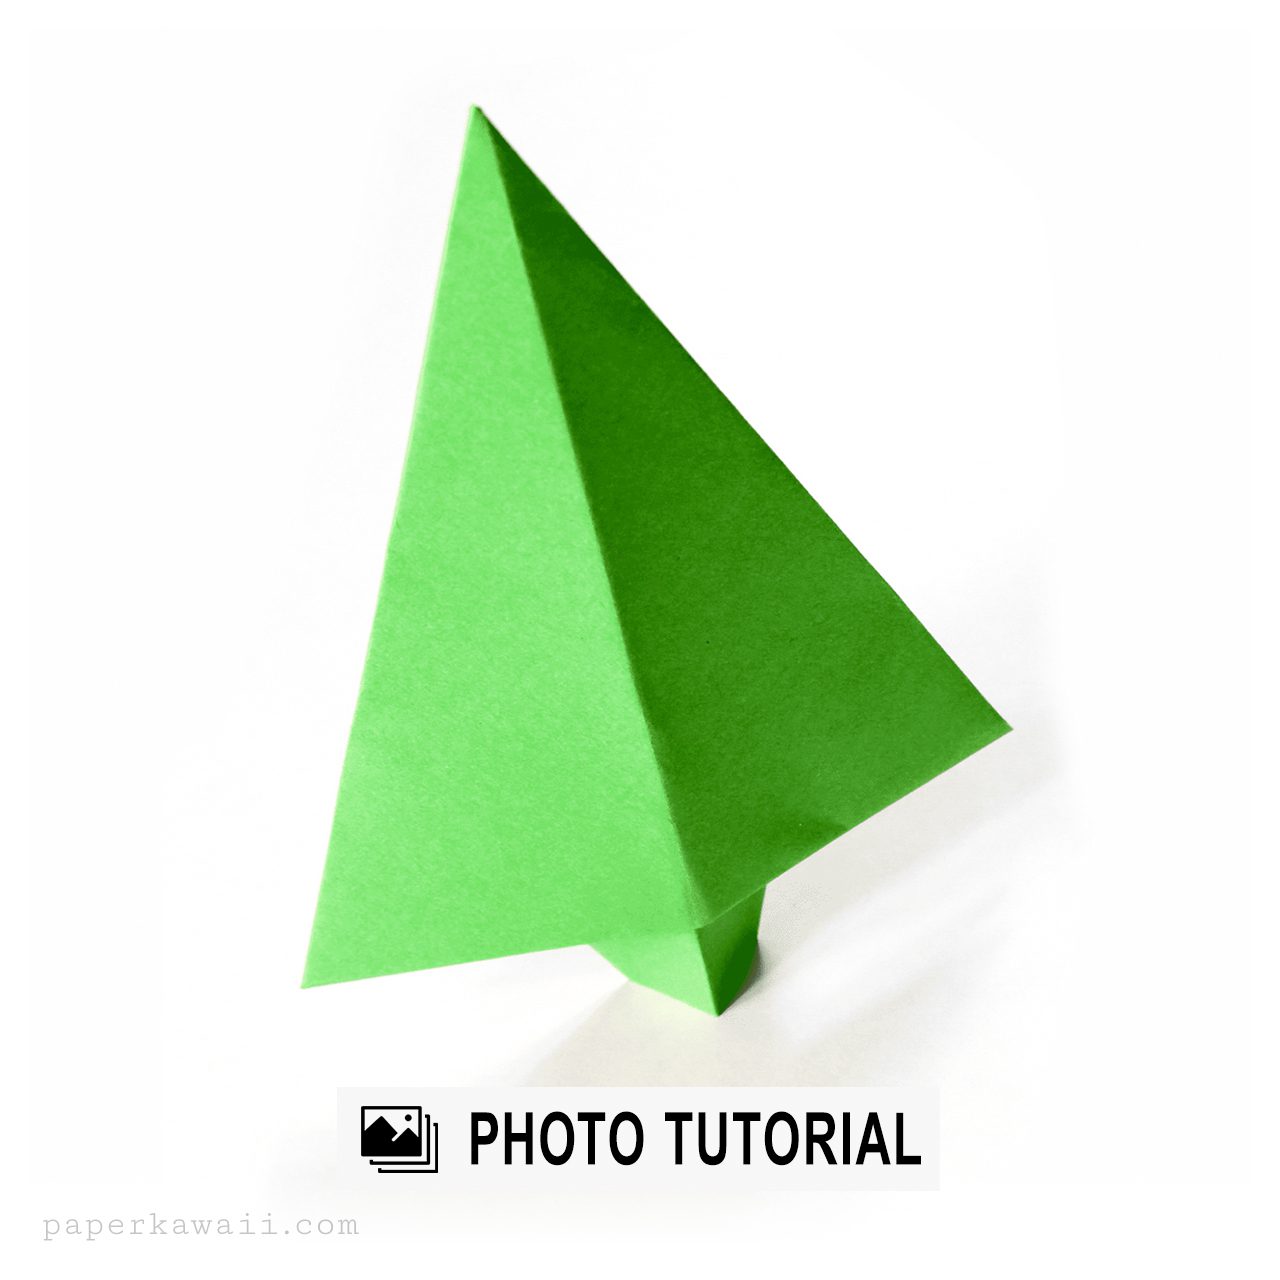 Origami Fir Tree Photo Tutorial